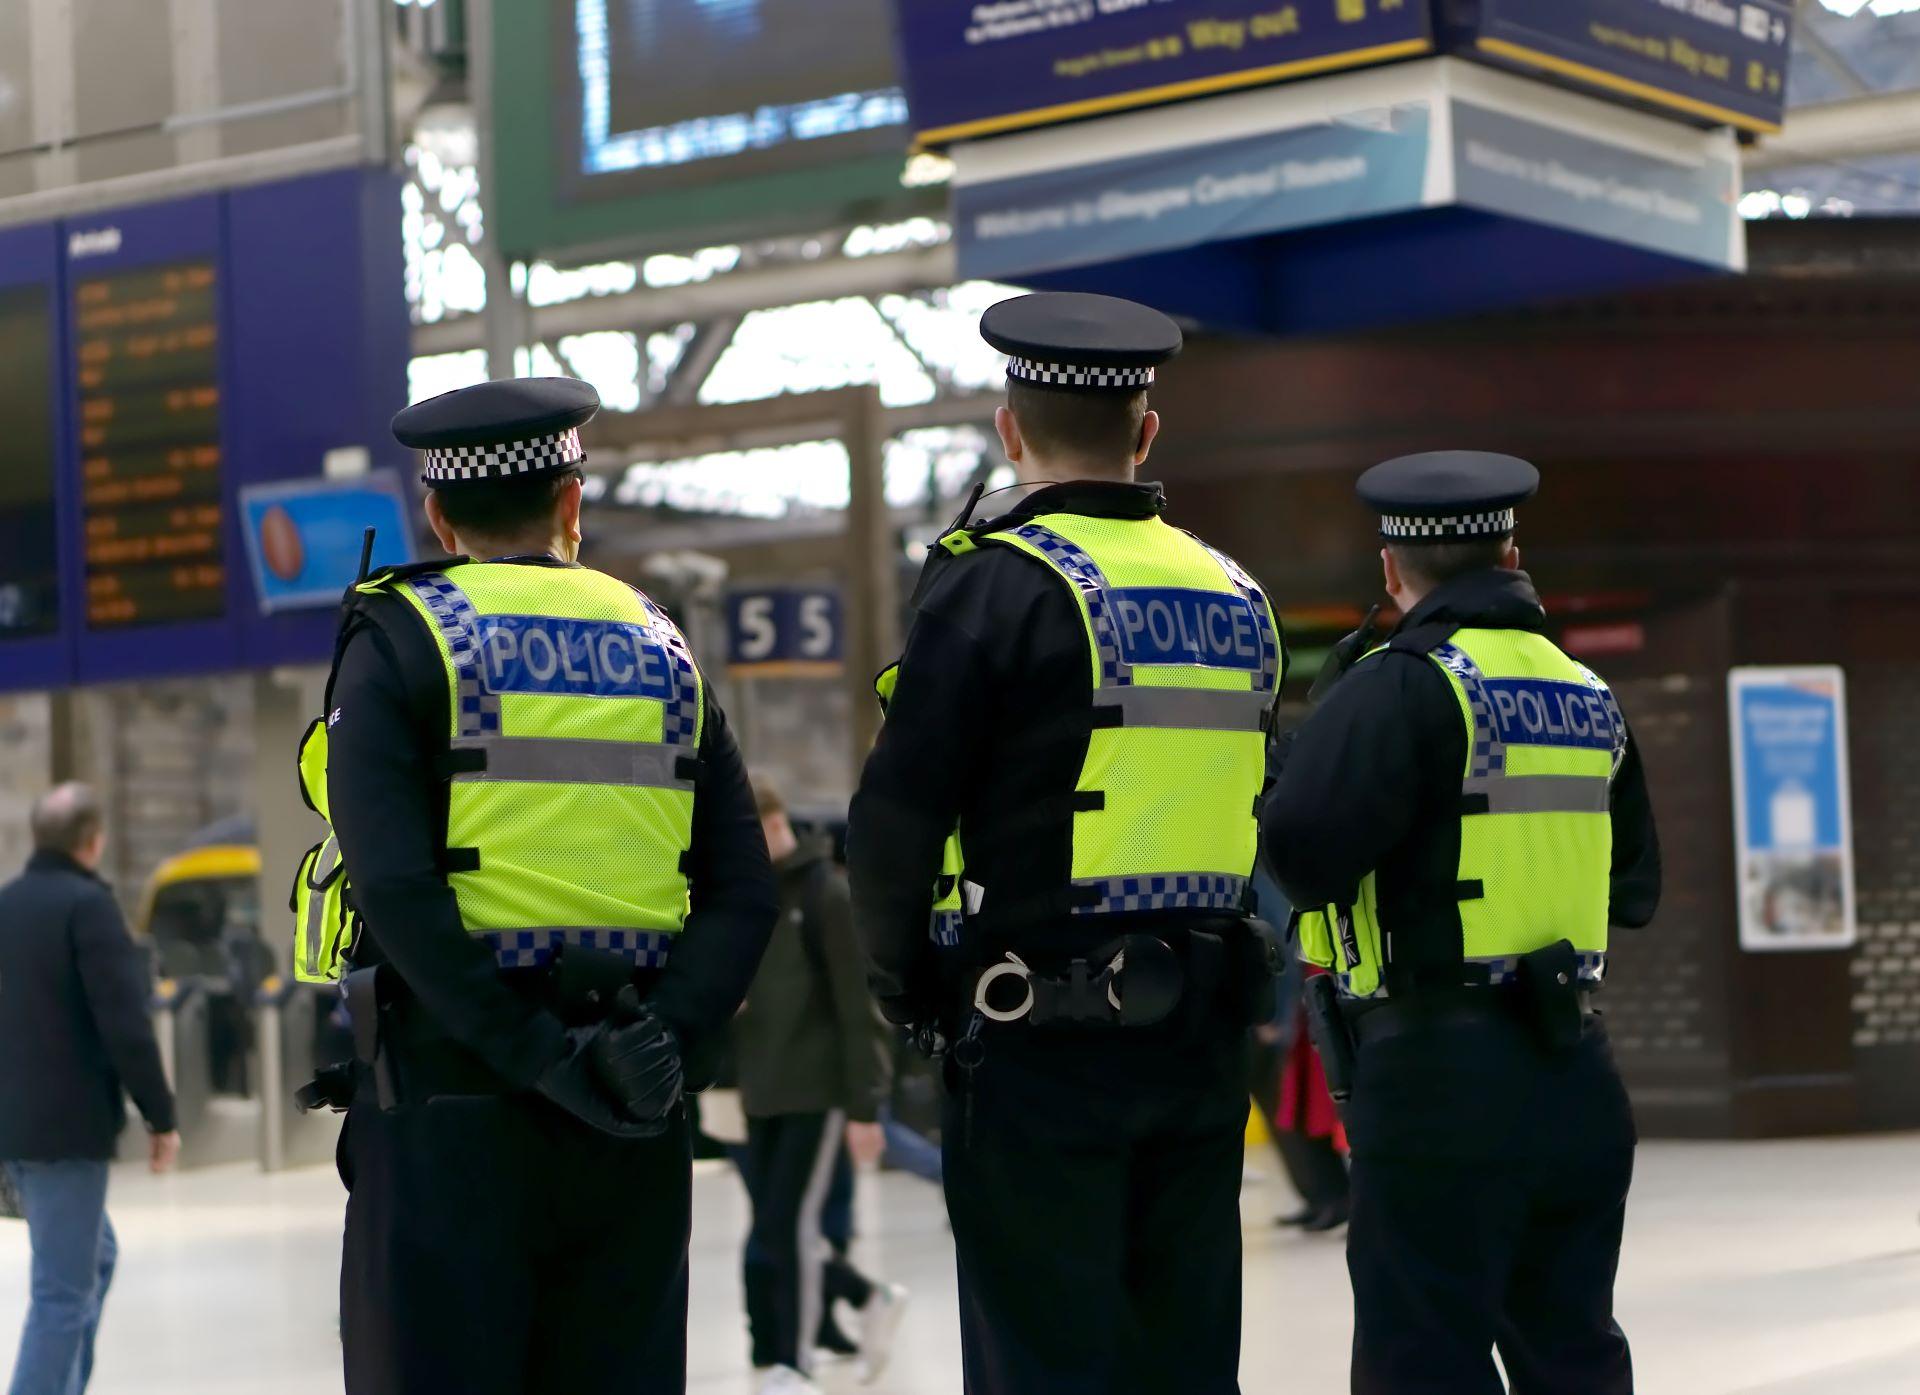 Policemen in England guarding a scene